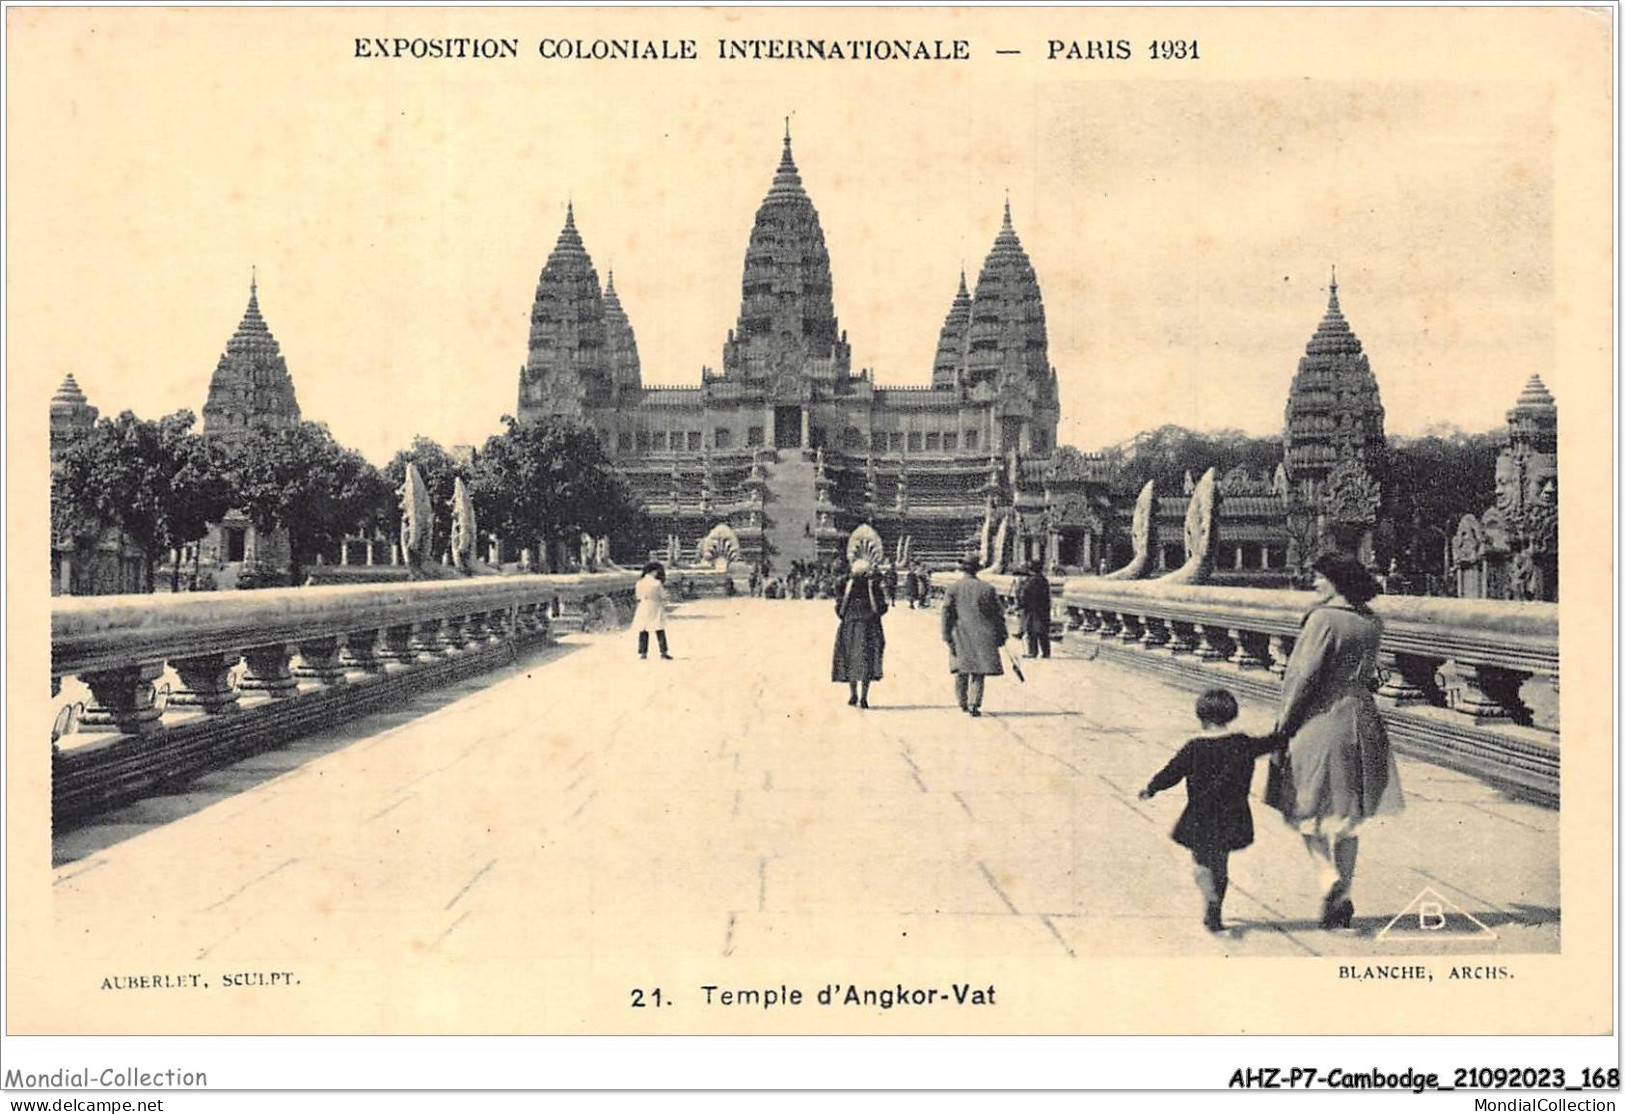 AHZP7-CAMBODGE-0680 - EXPOSITION COLONIALE INTERNATIONALE - PARIS 1931 - TEMPLE D'ANGKOR-VAT - Cambodge